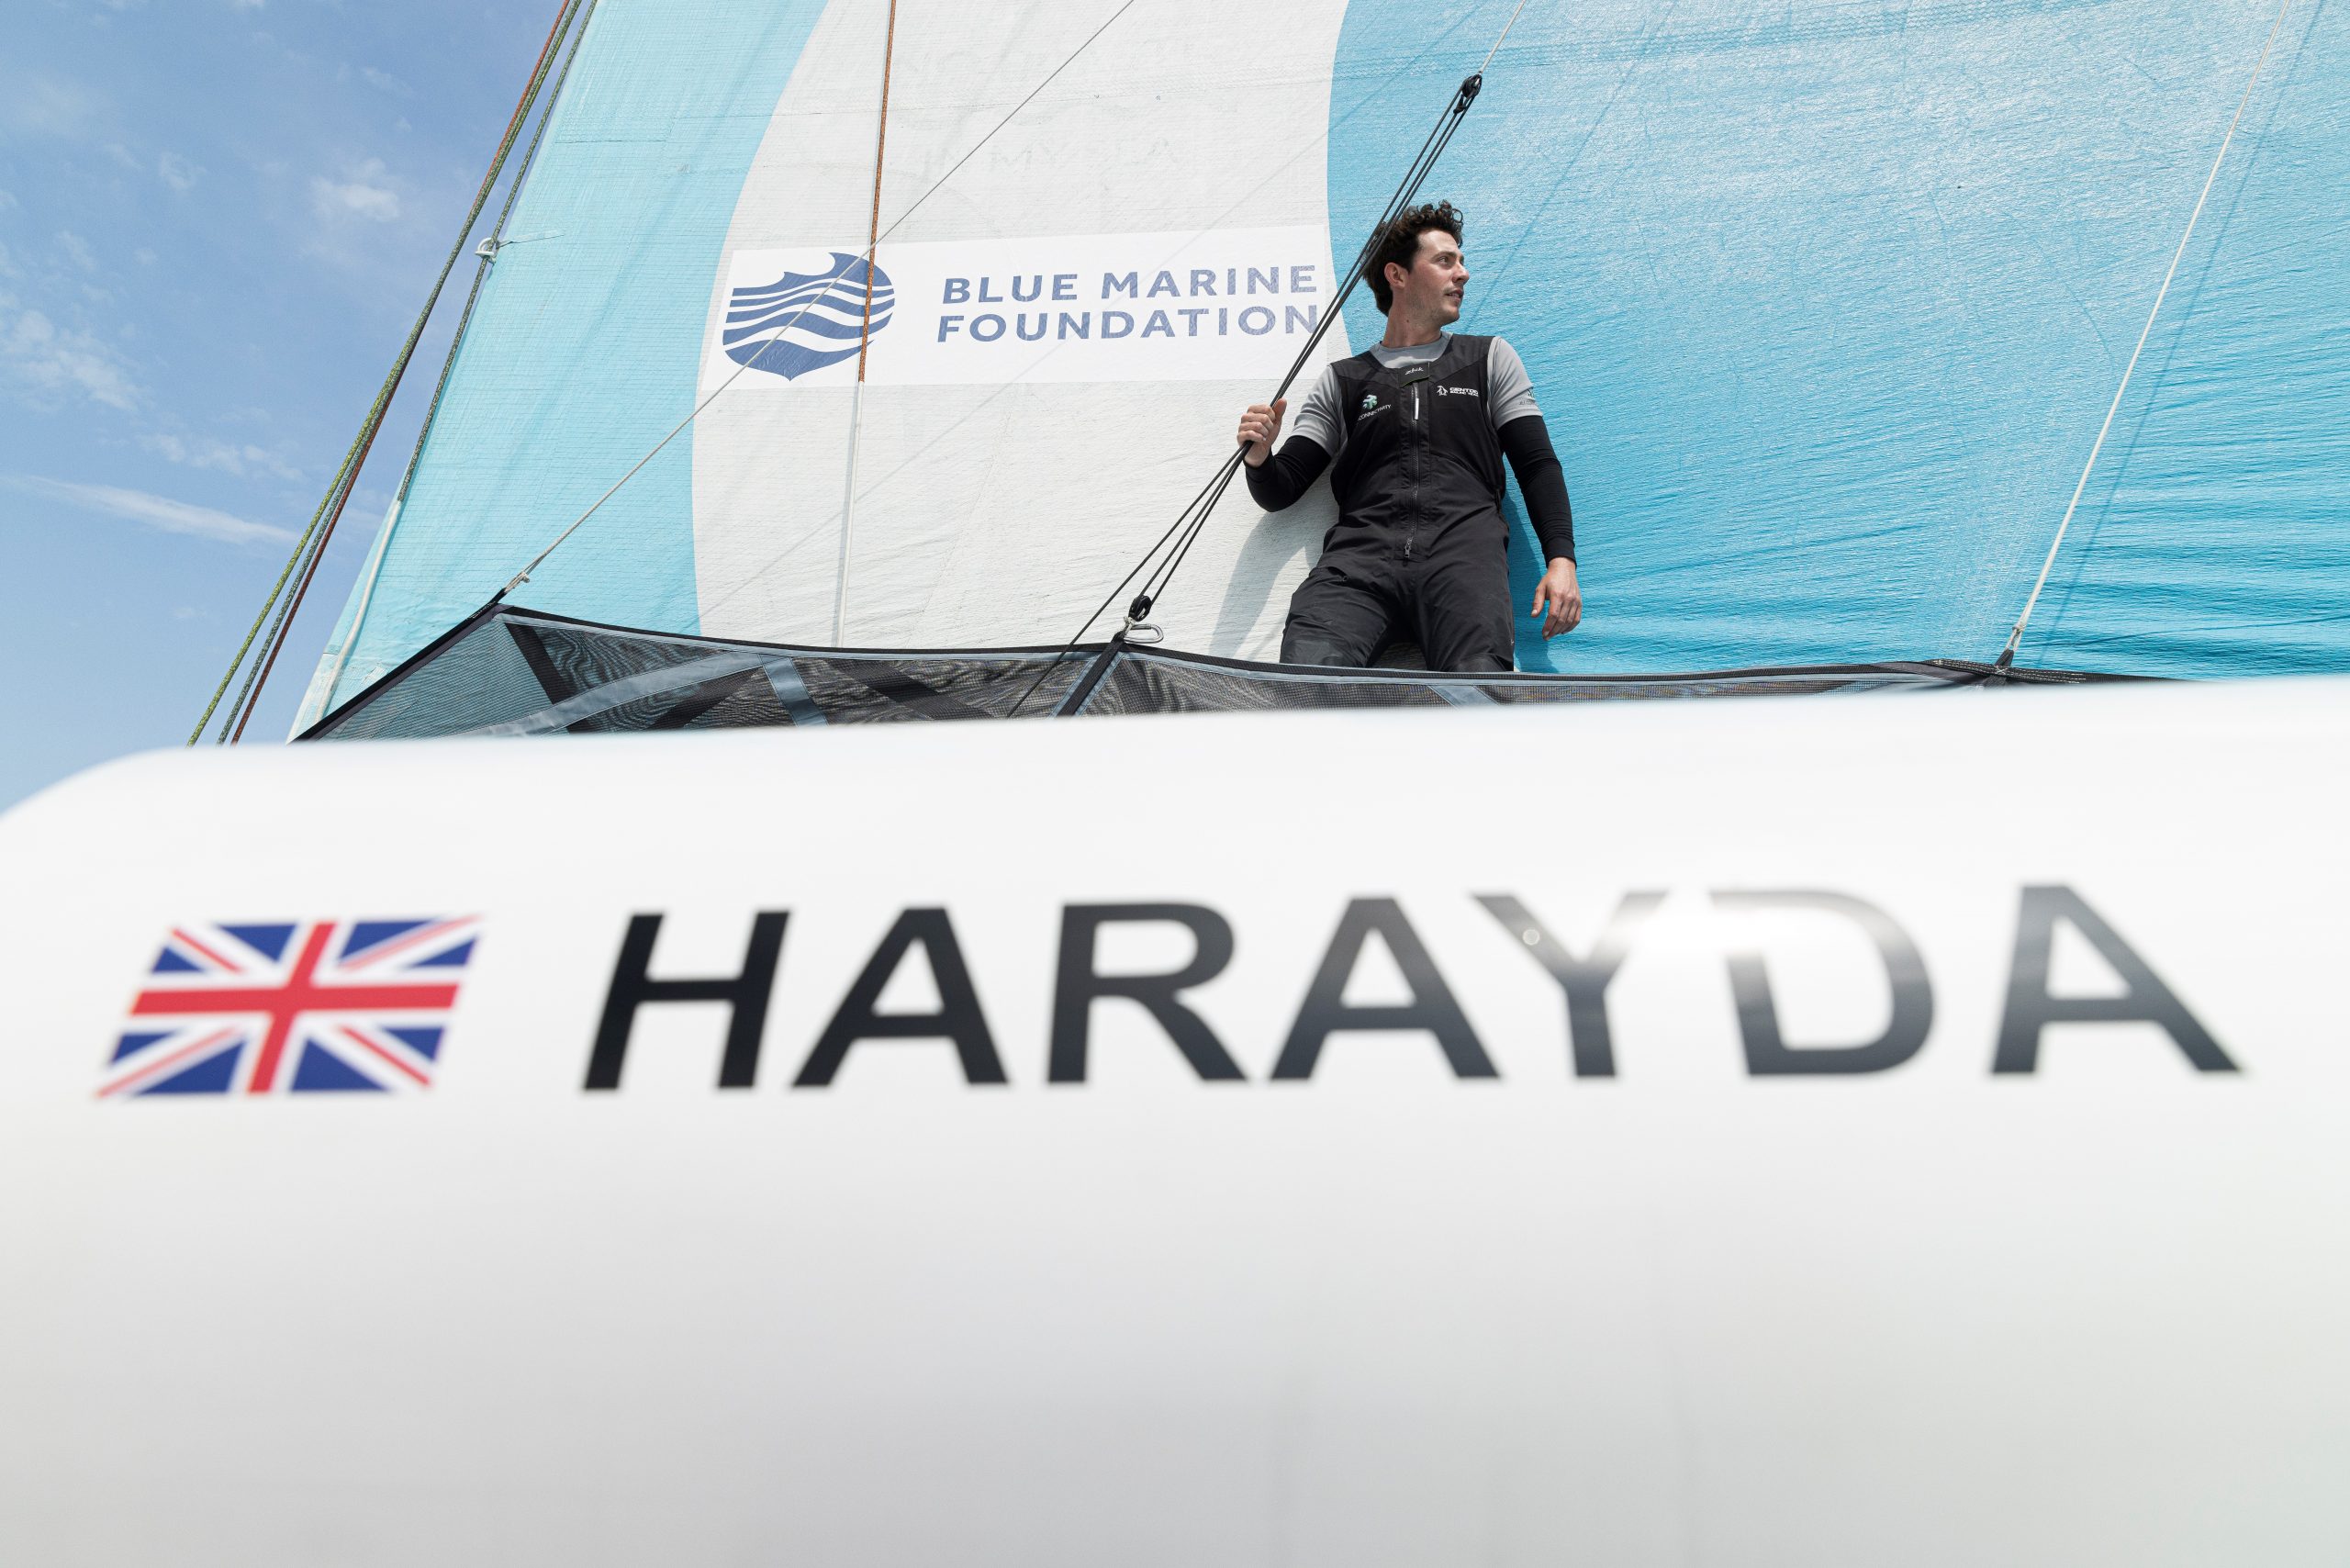 James-Harayda-Blue-Marine-Foundation-Ambasador-Gentoo-Sailing-Team